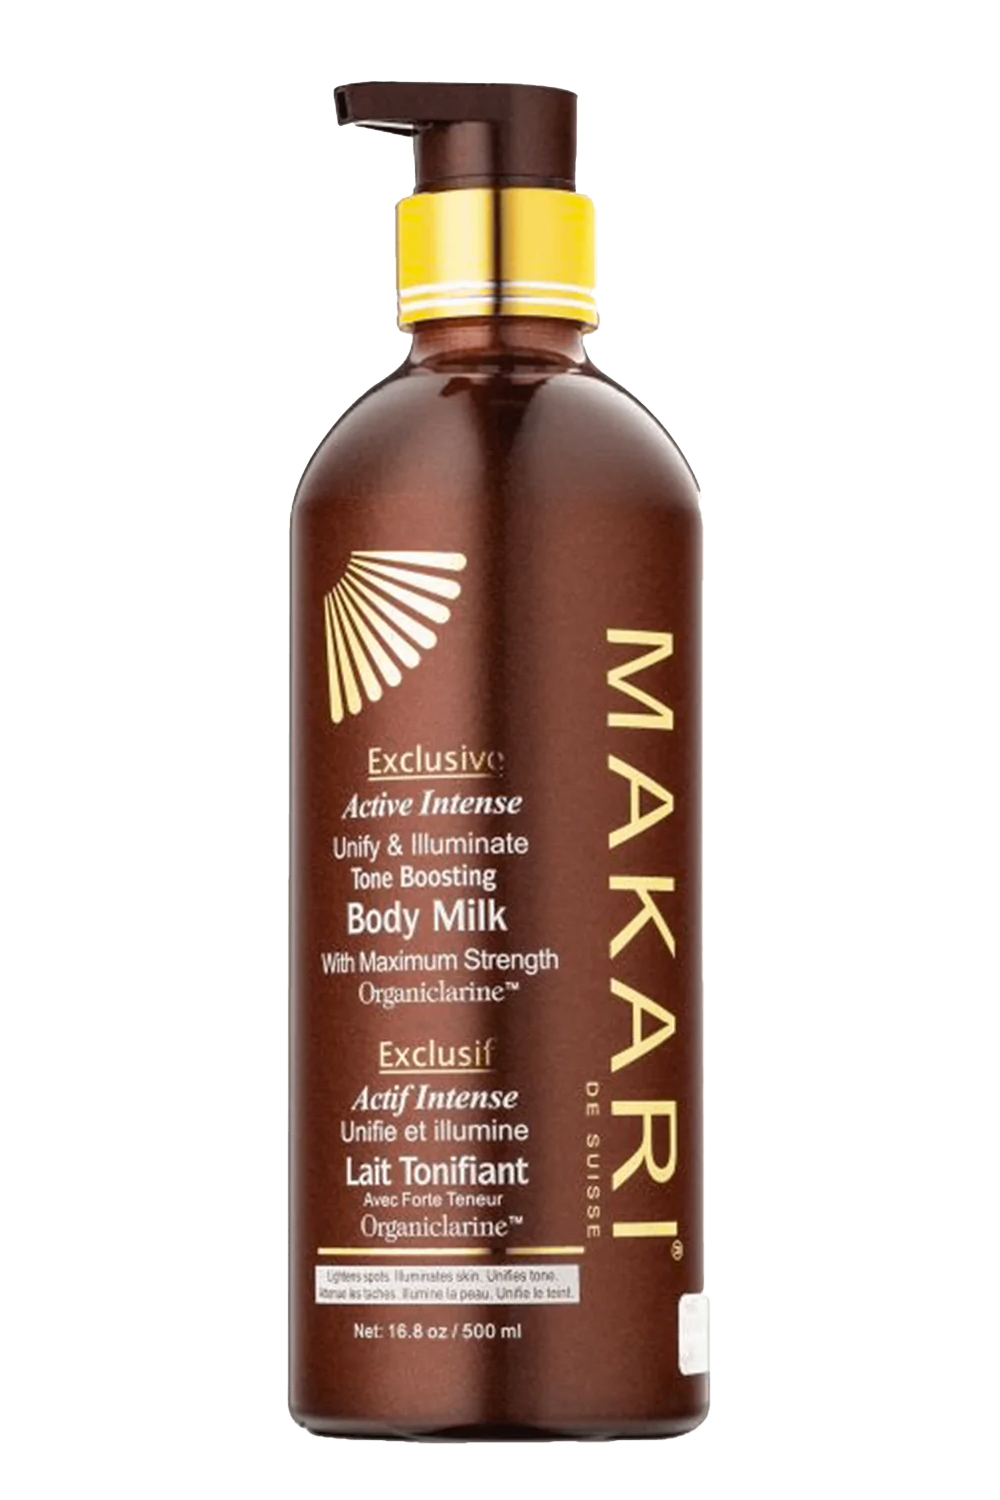 Makari Exclusive Active Intense Tone Boosting Body Milk.